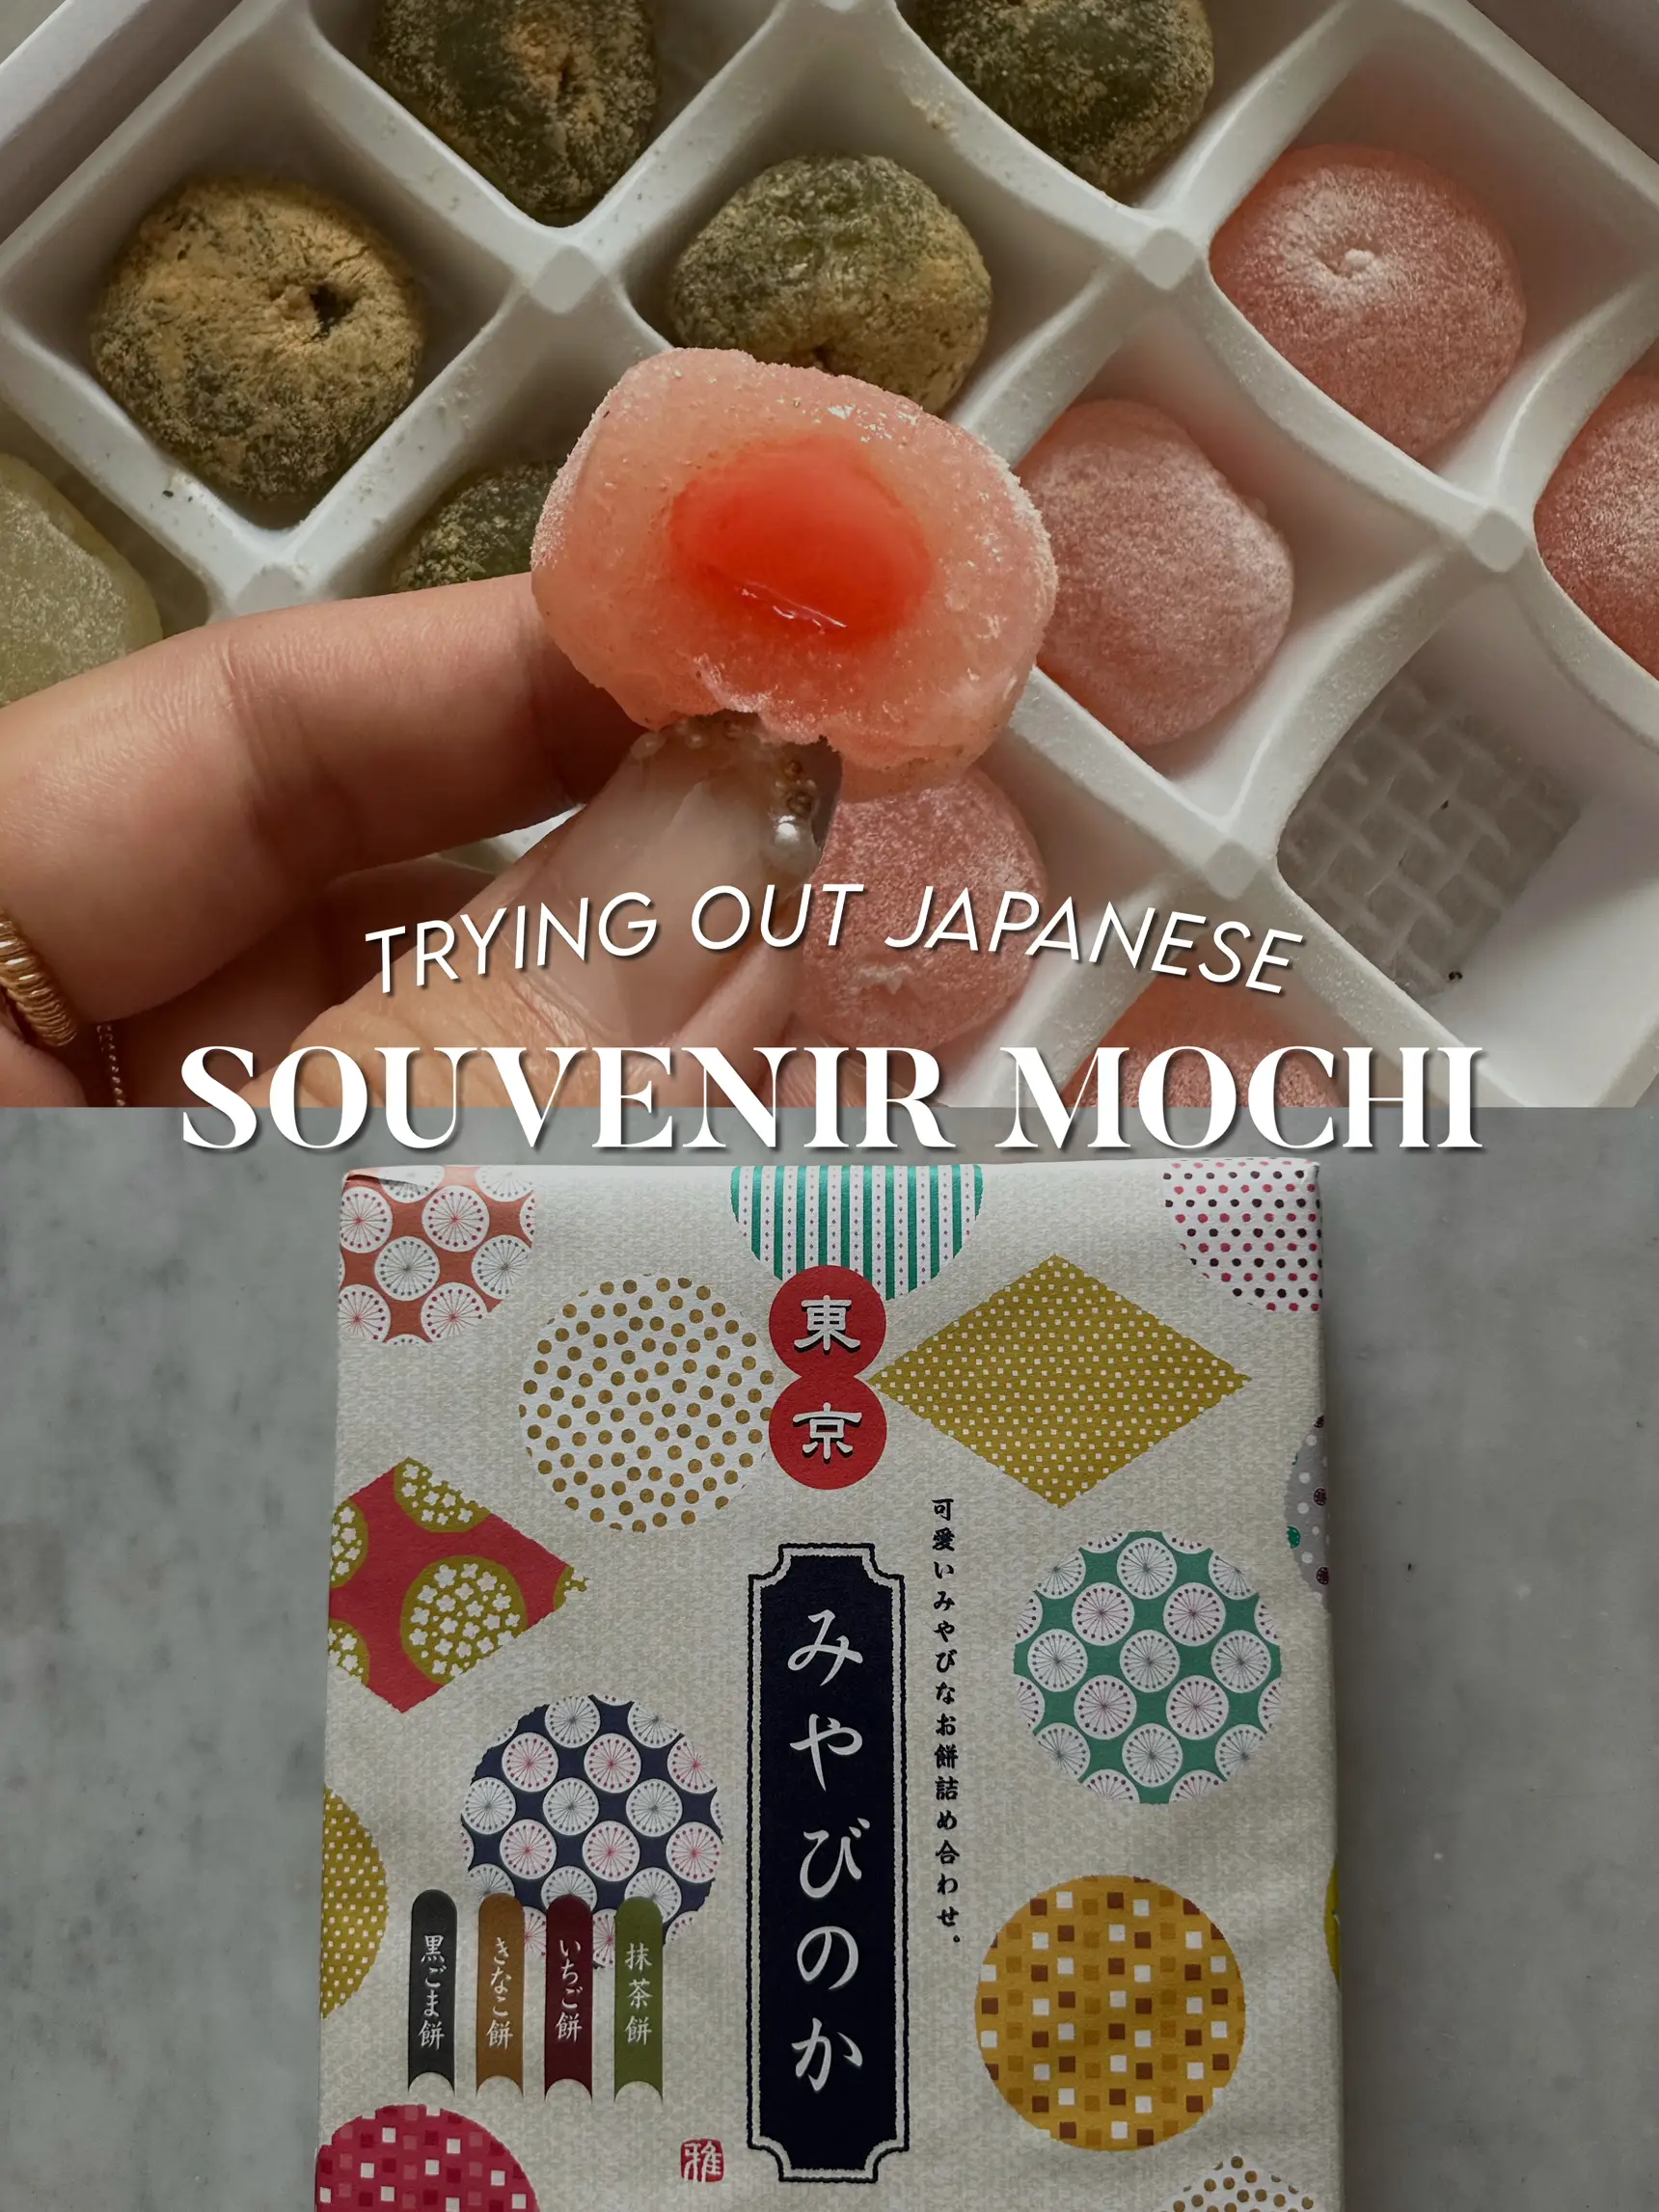 Mochi (餅) - Food in Japan